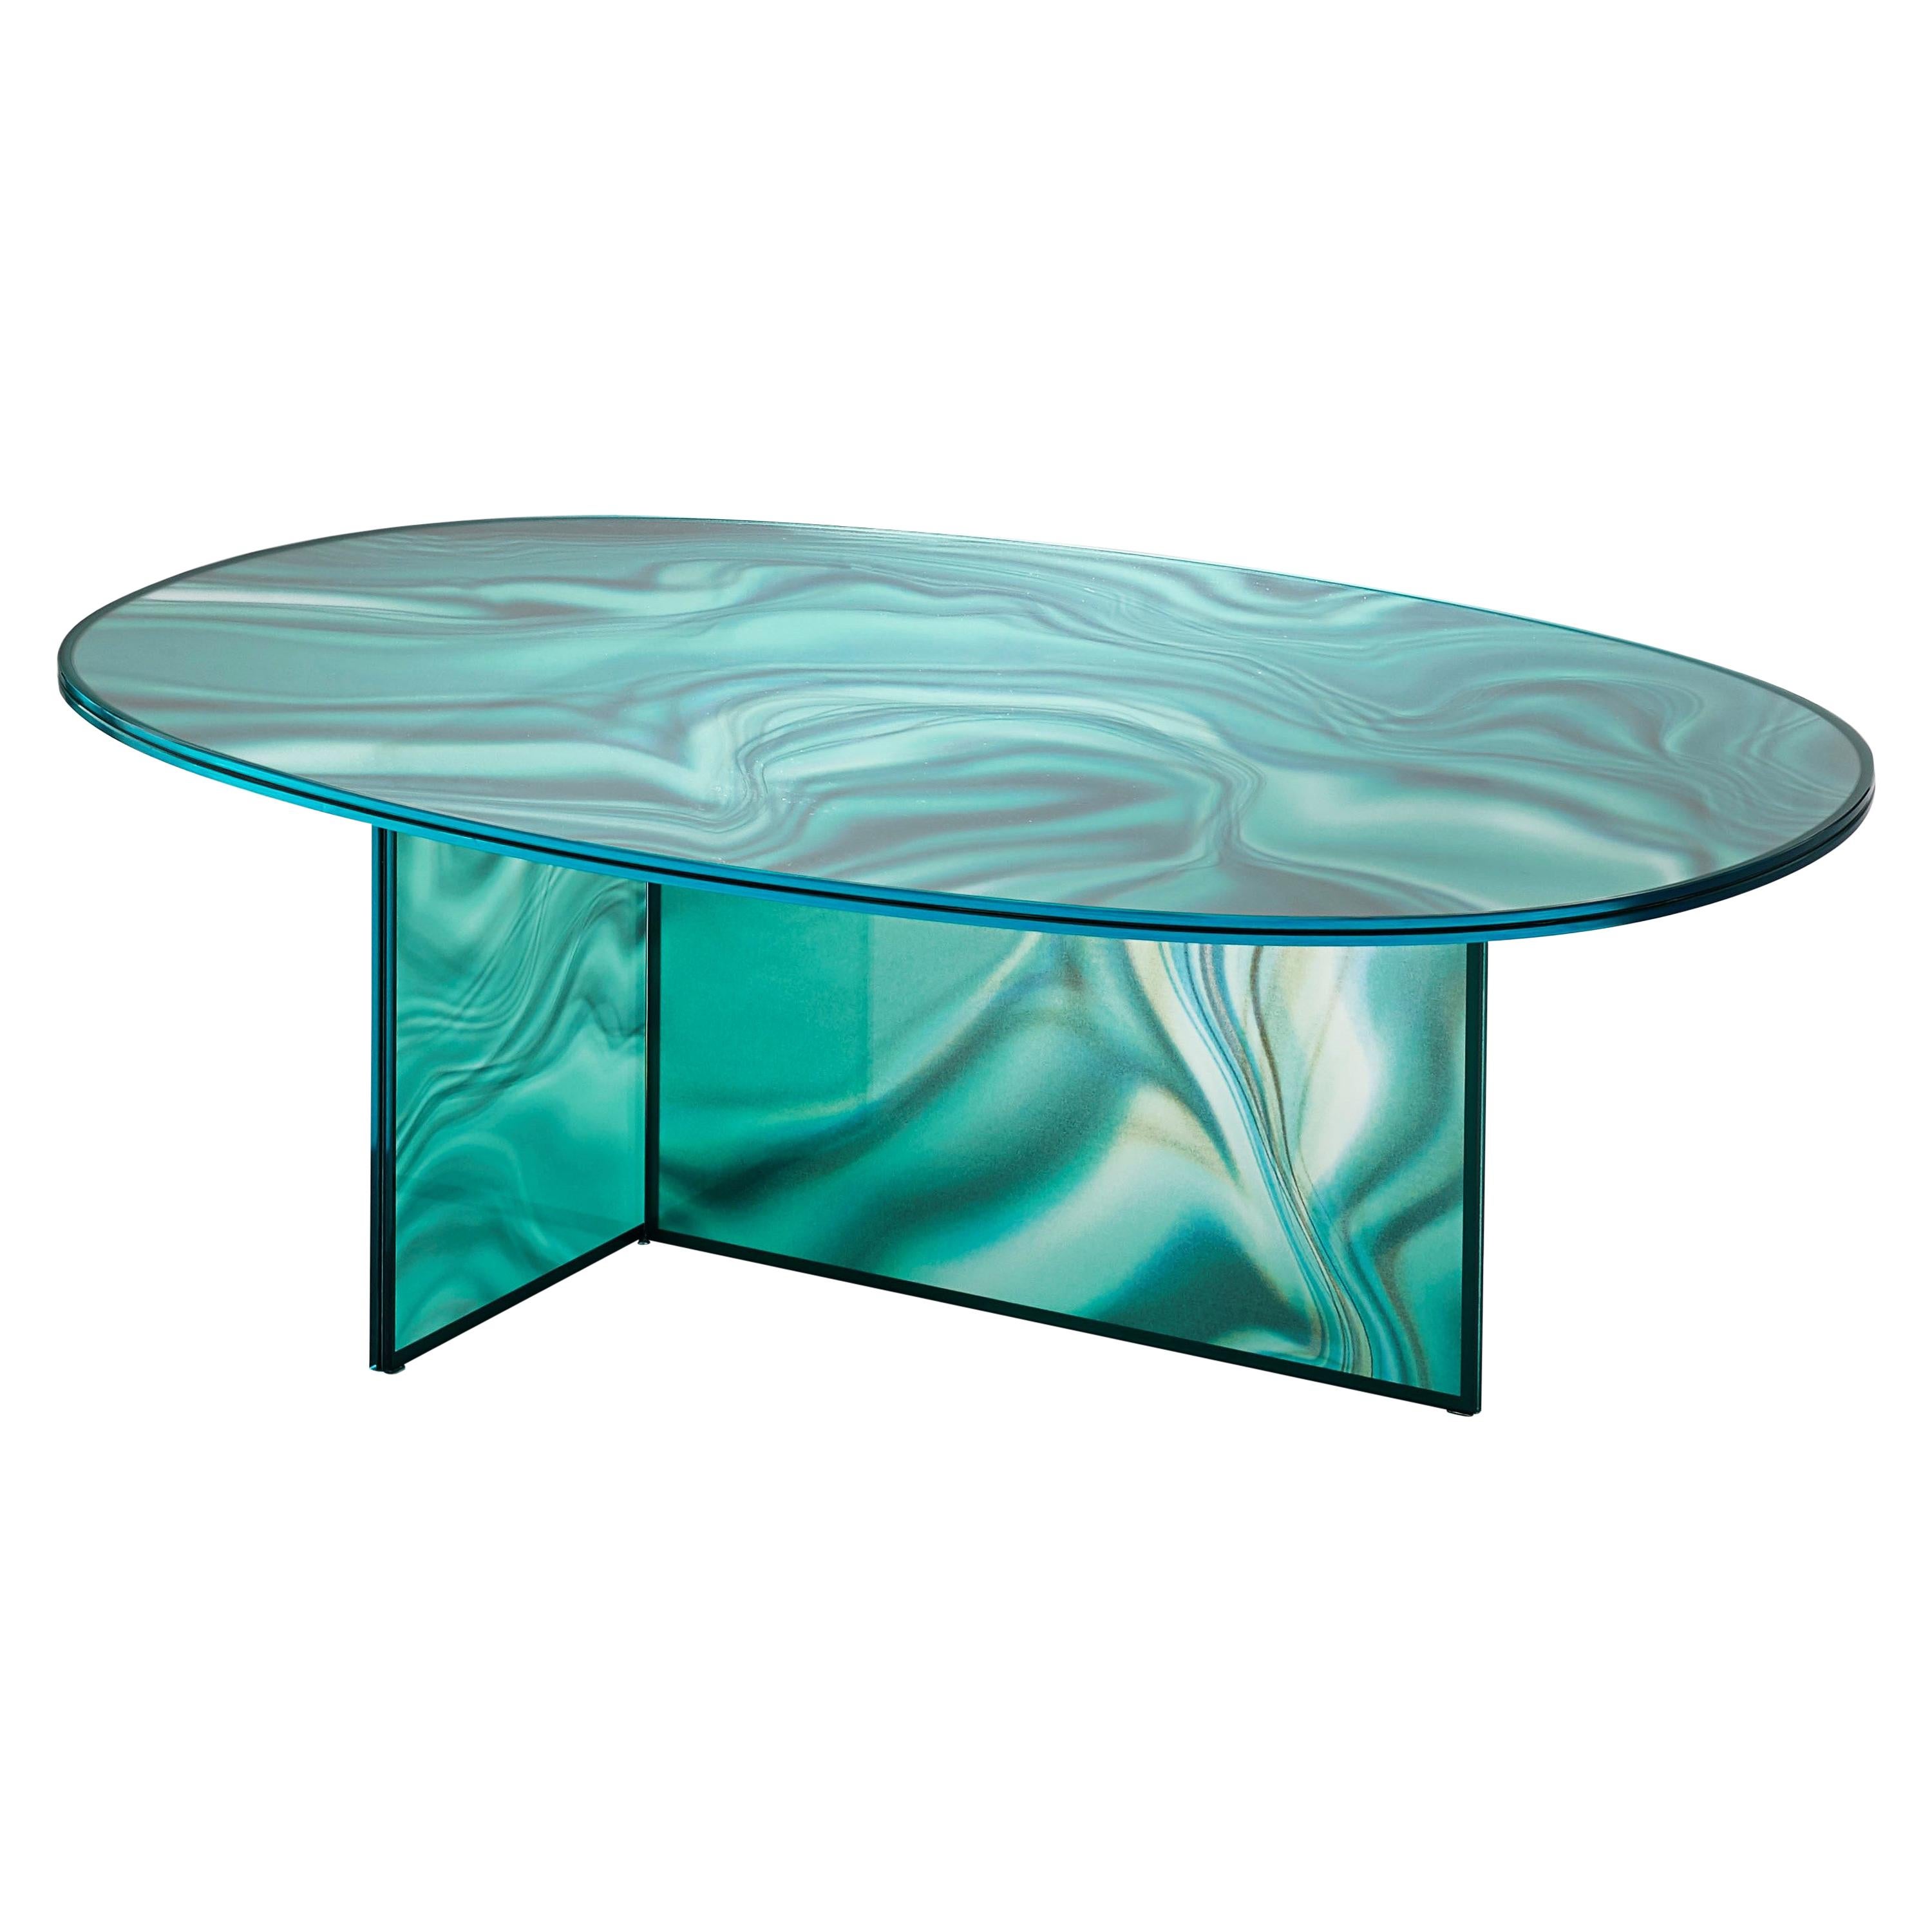 LIQUEFY Coffee Tables Designed by Patricia Urquiola for Glas Italia